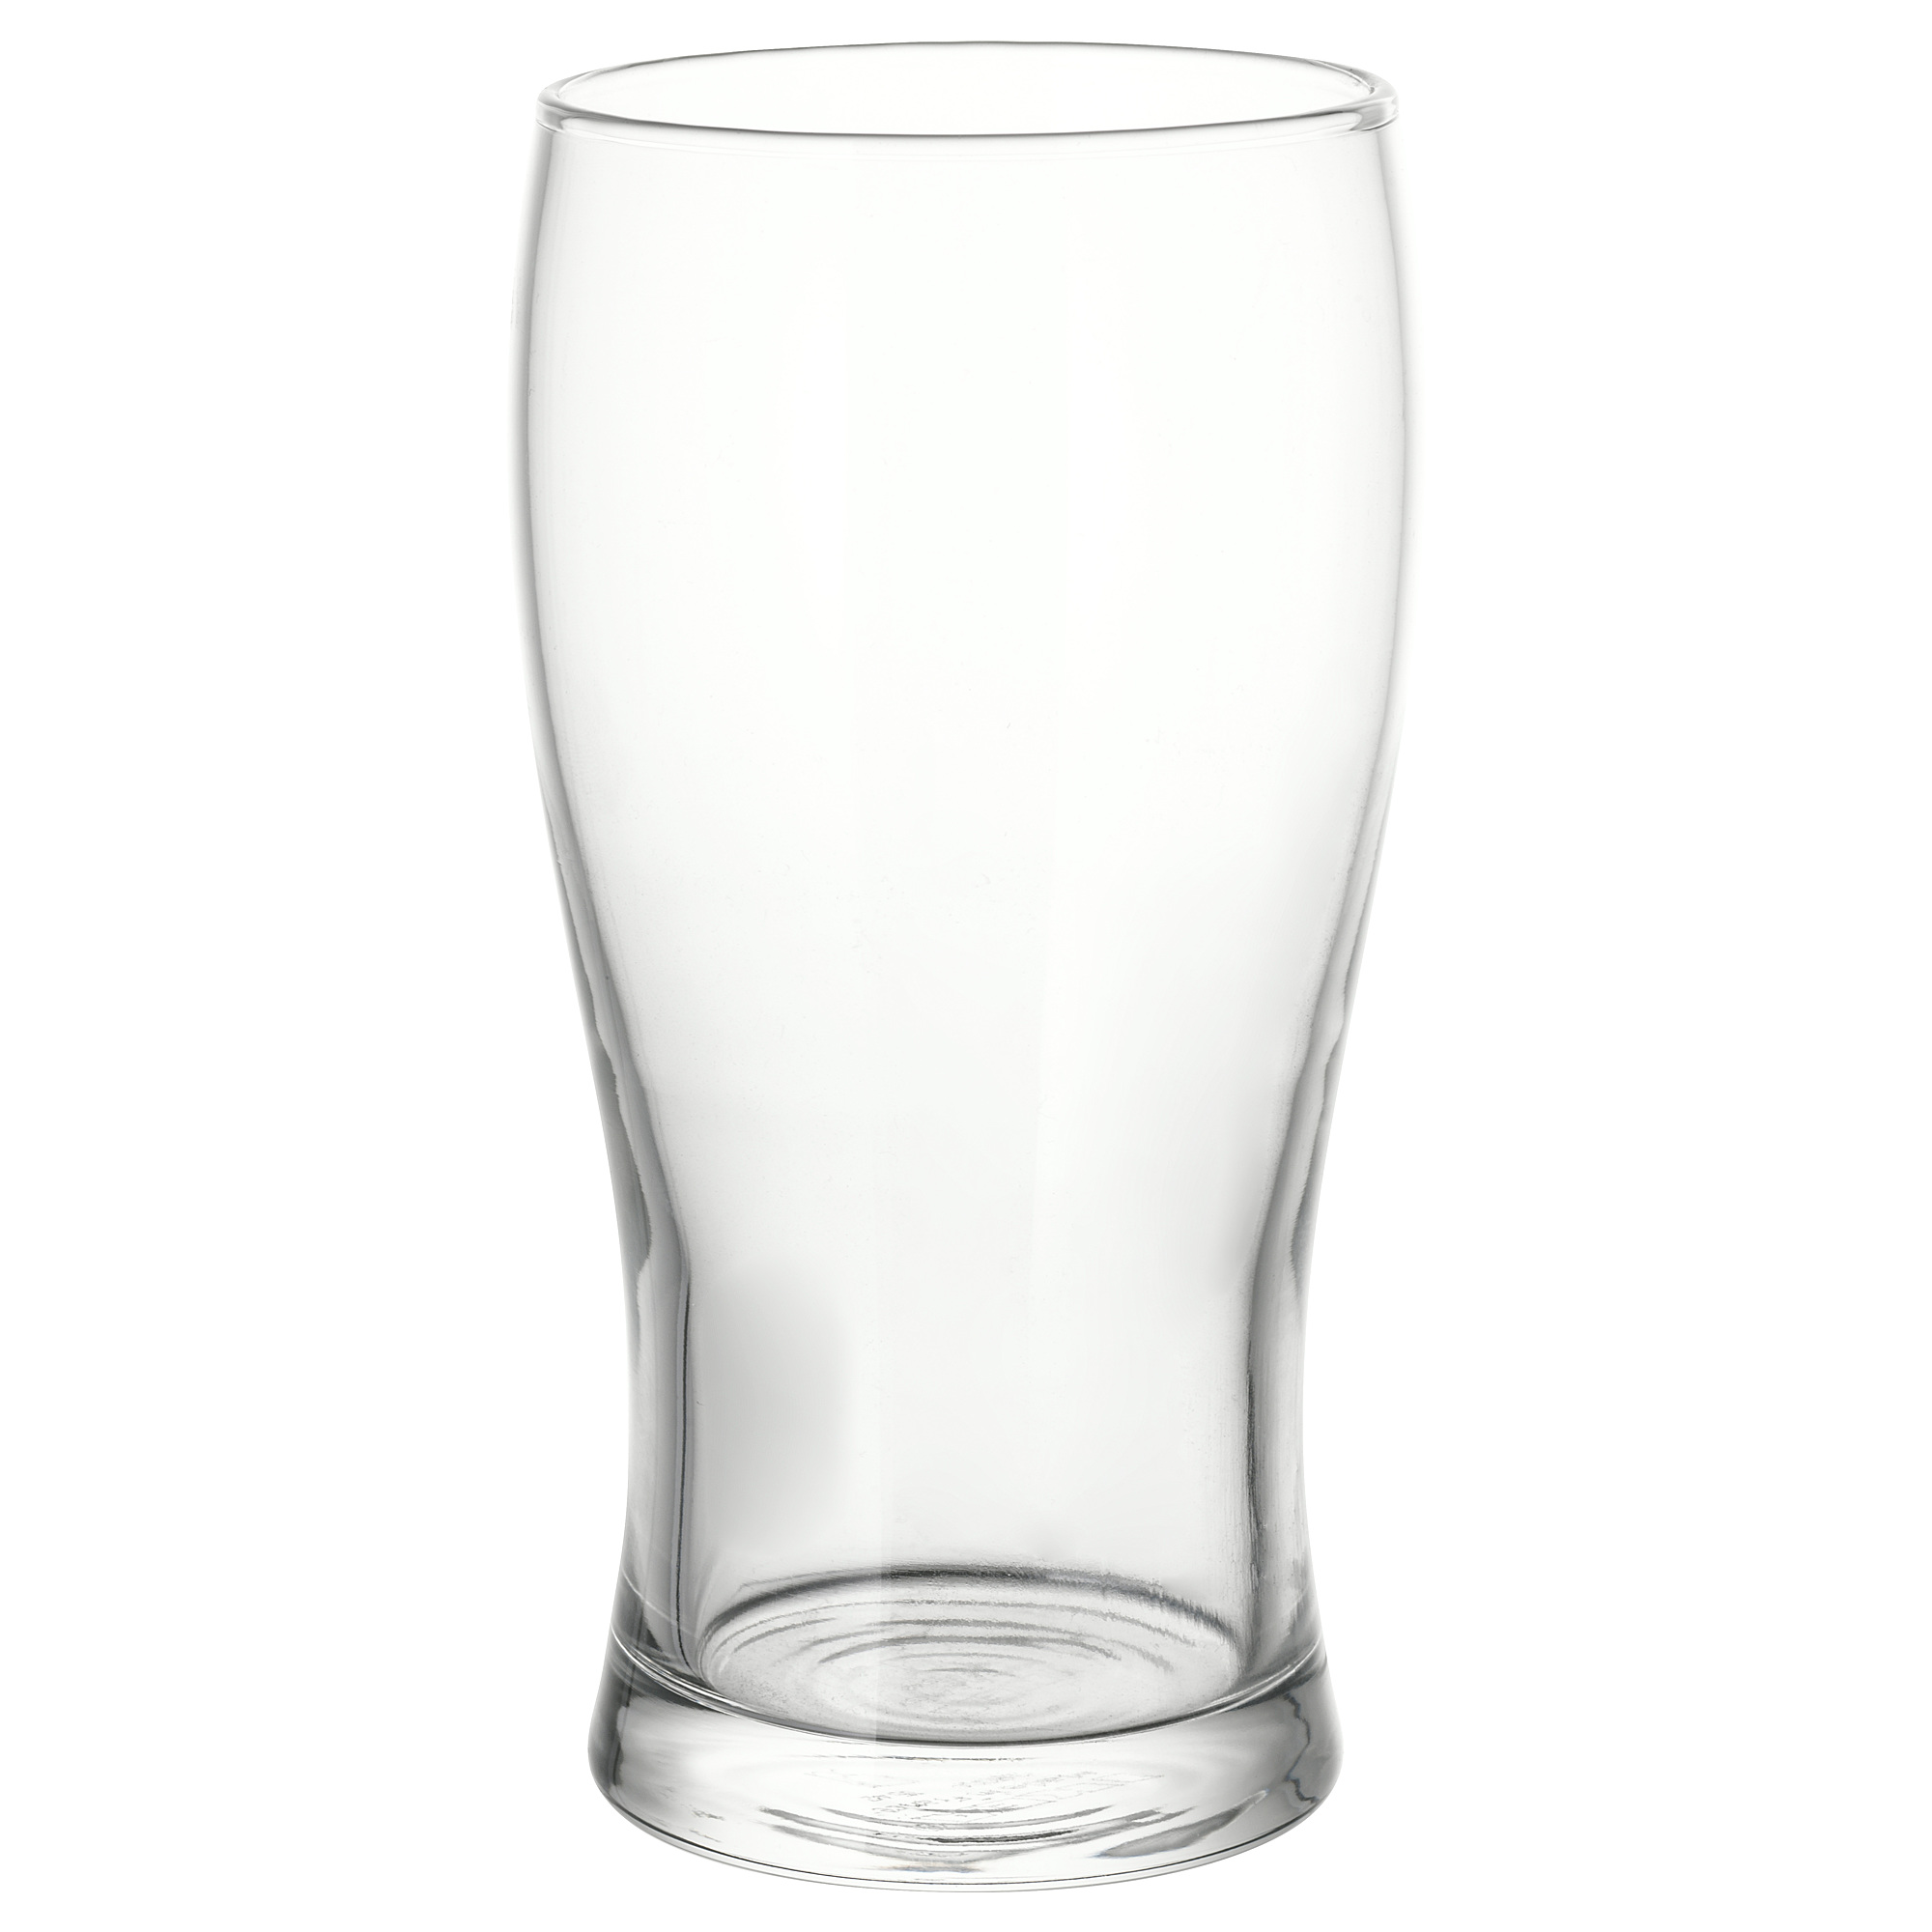 LODRÄT beer glass